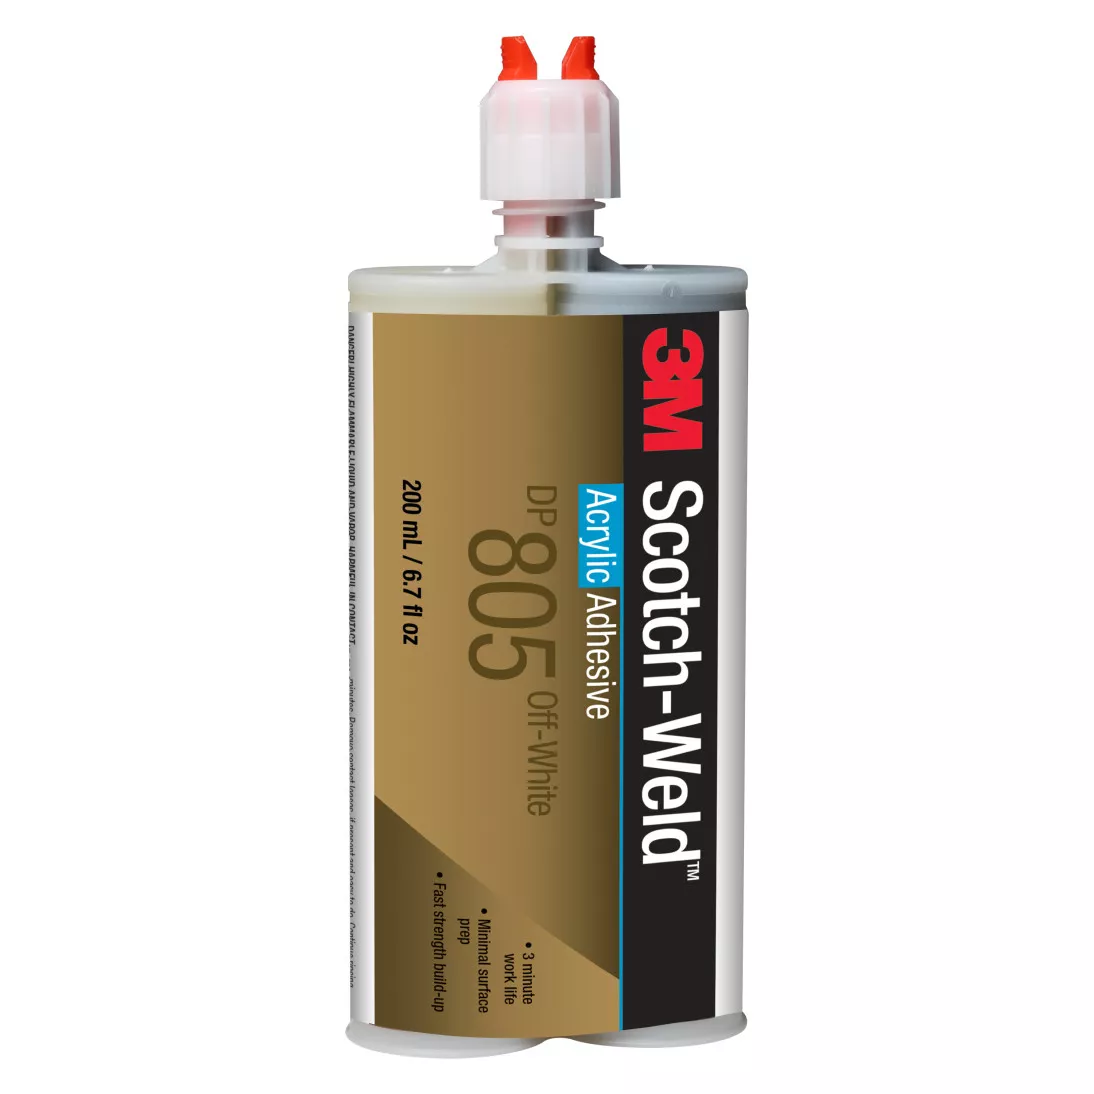 3M™ Scotch-Weld™ Acrylic Adhesive DP805, Off-White, 200 mL Duo-Pak,
12/Case